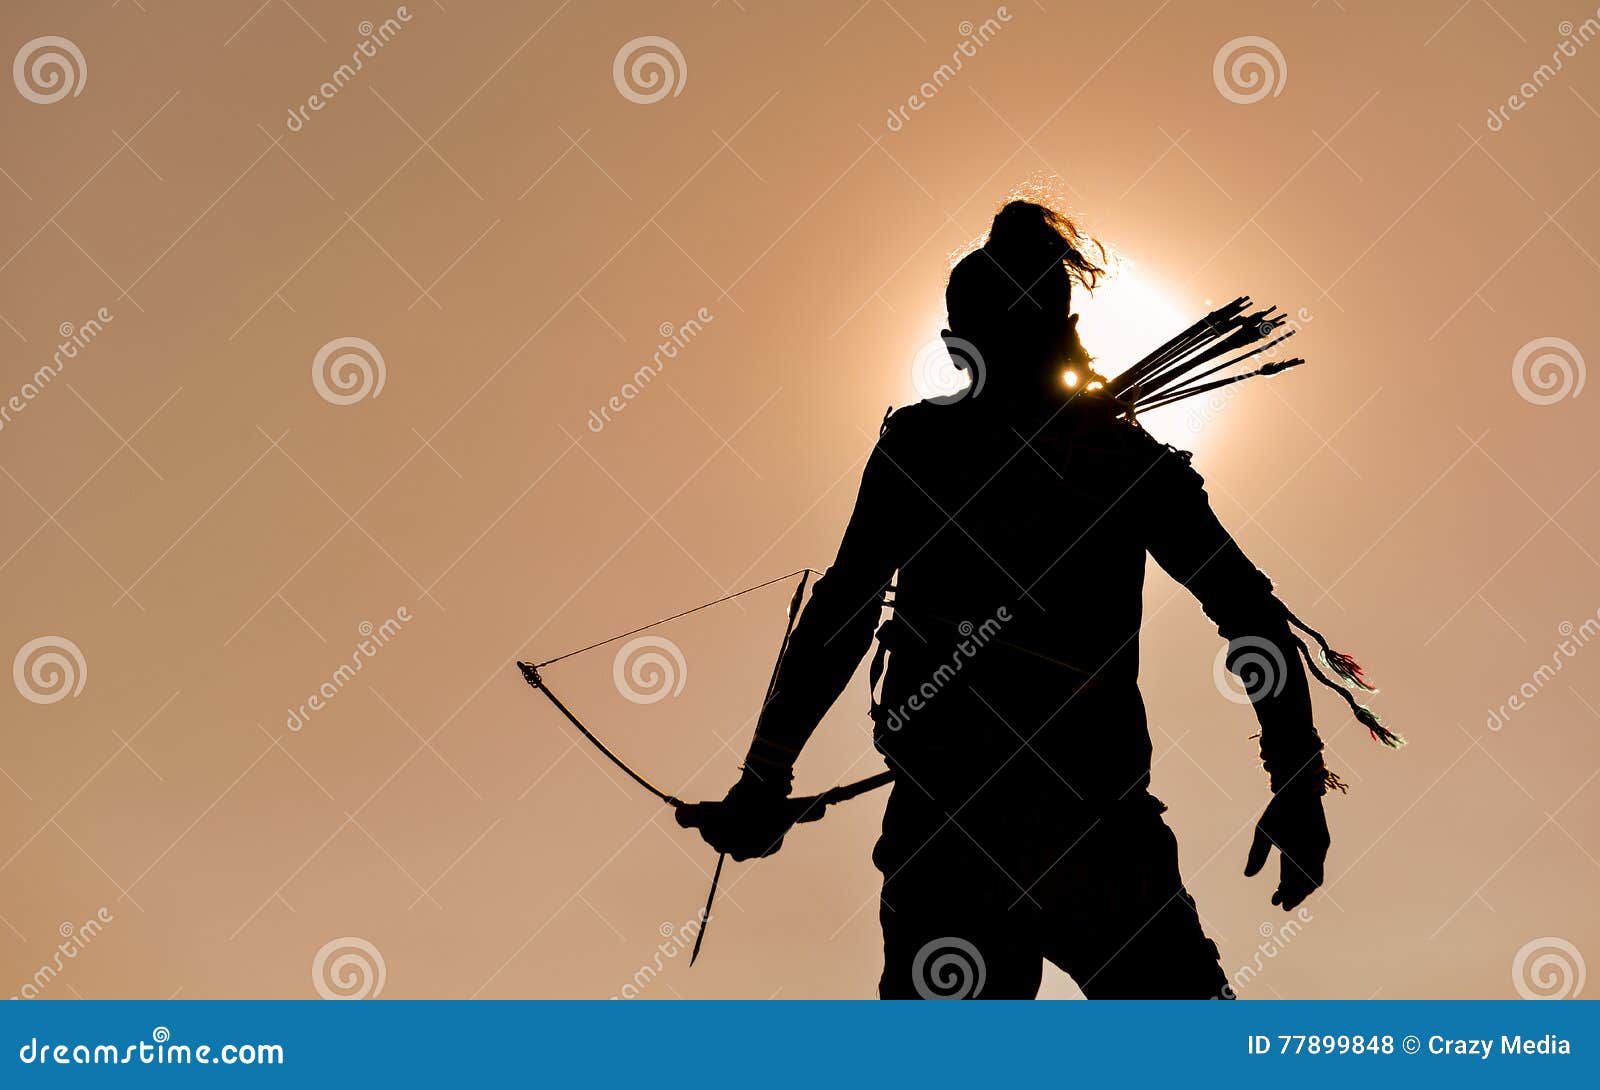 archer at sunset